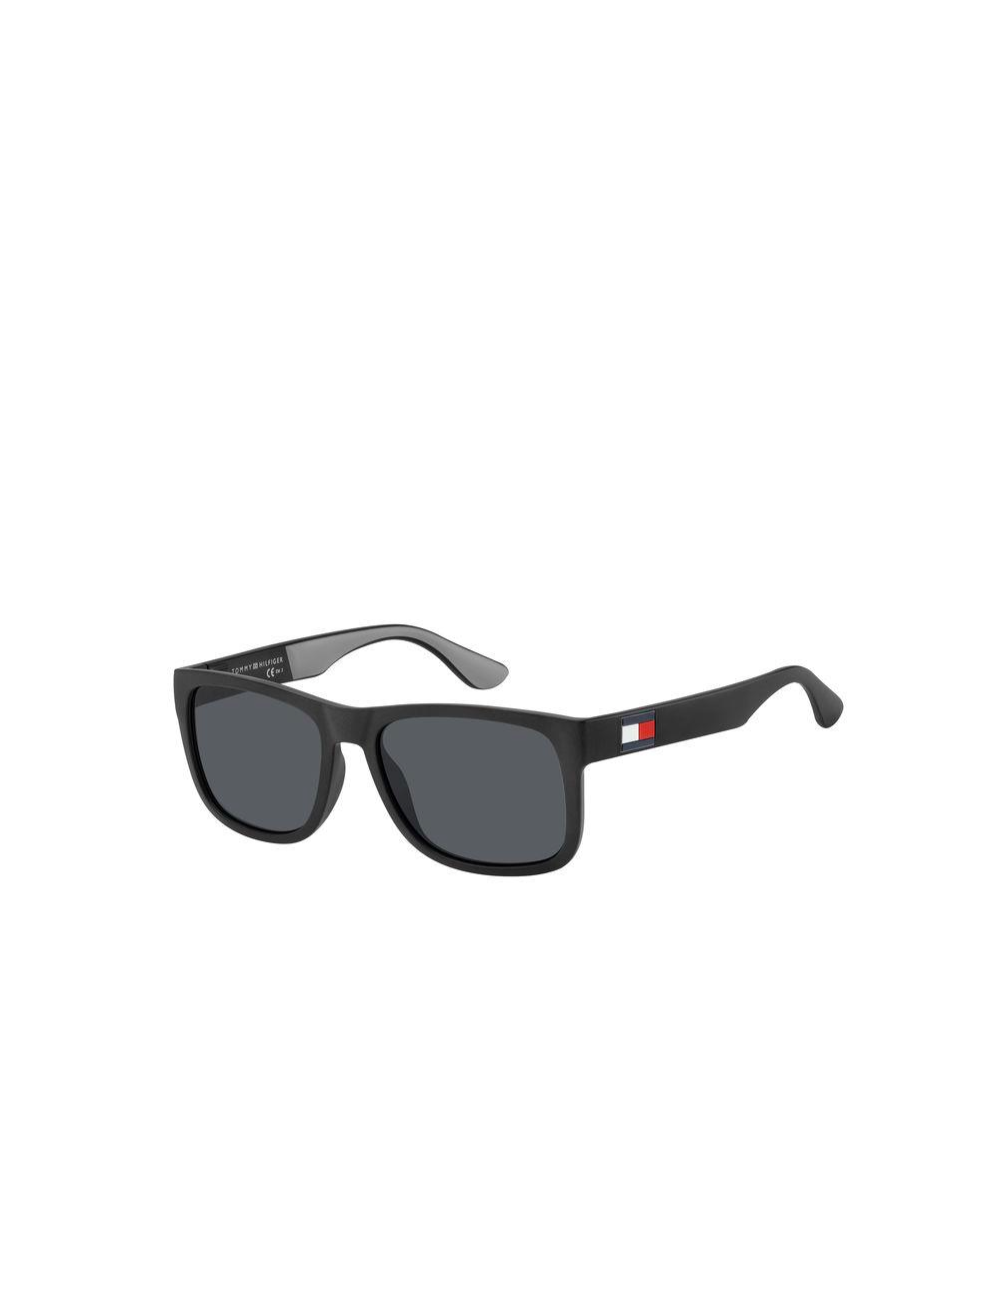 Hilfiger TH 1556/S sunglasses for men – Ottica Mauro